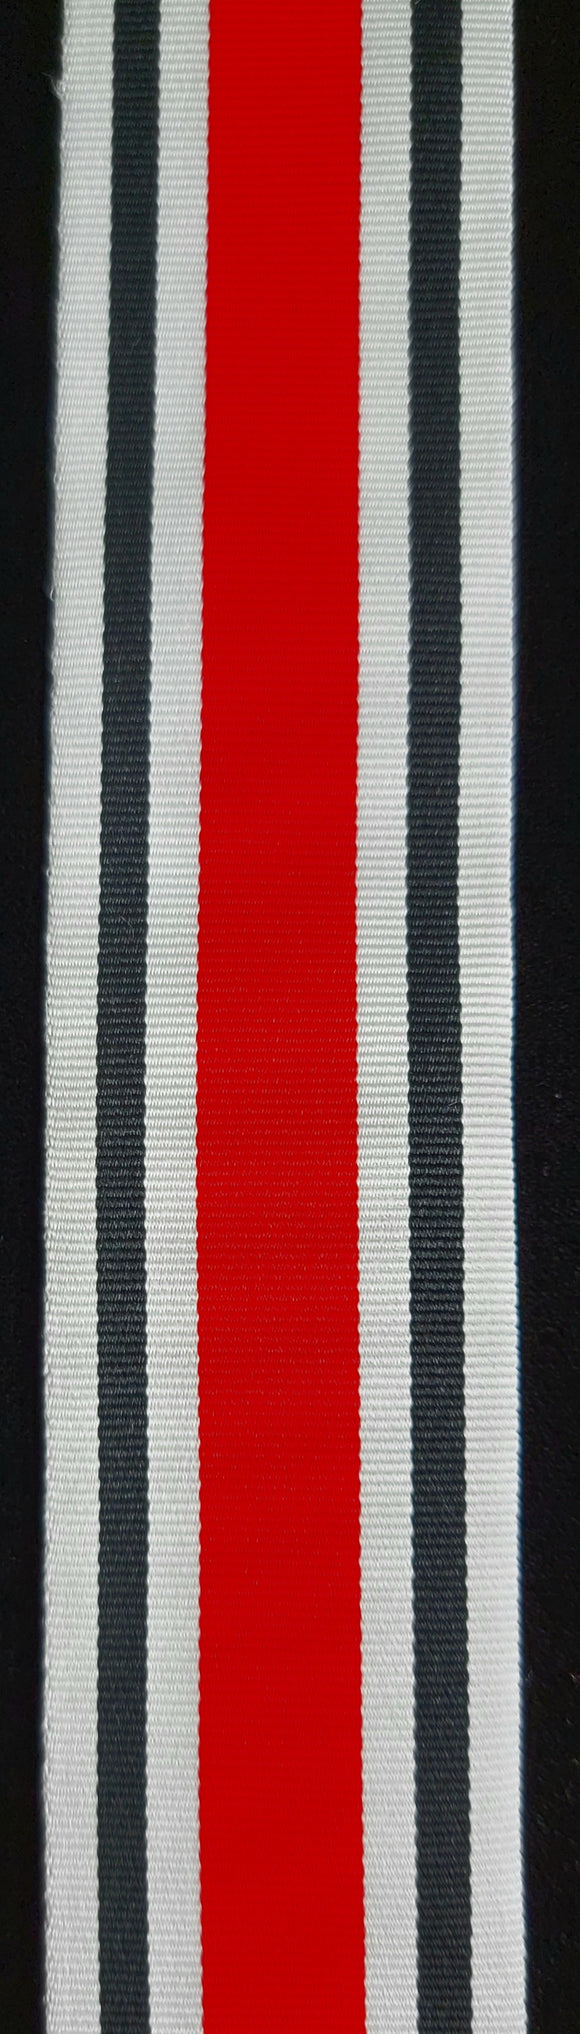 Ribbon, UK Special Constabulary Medal